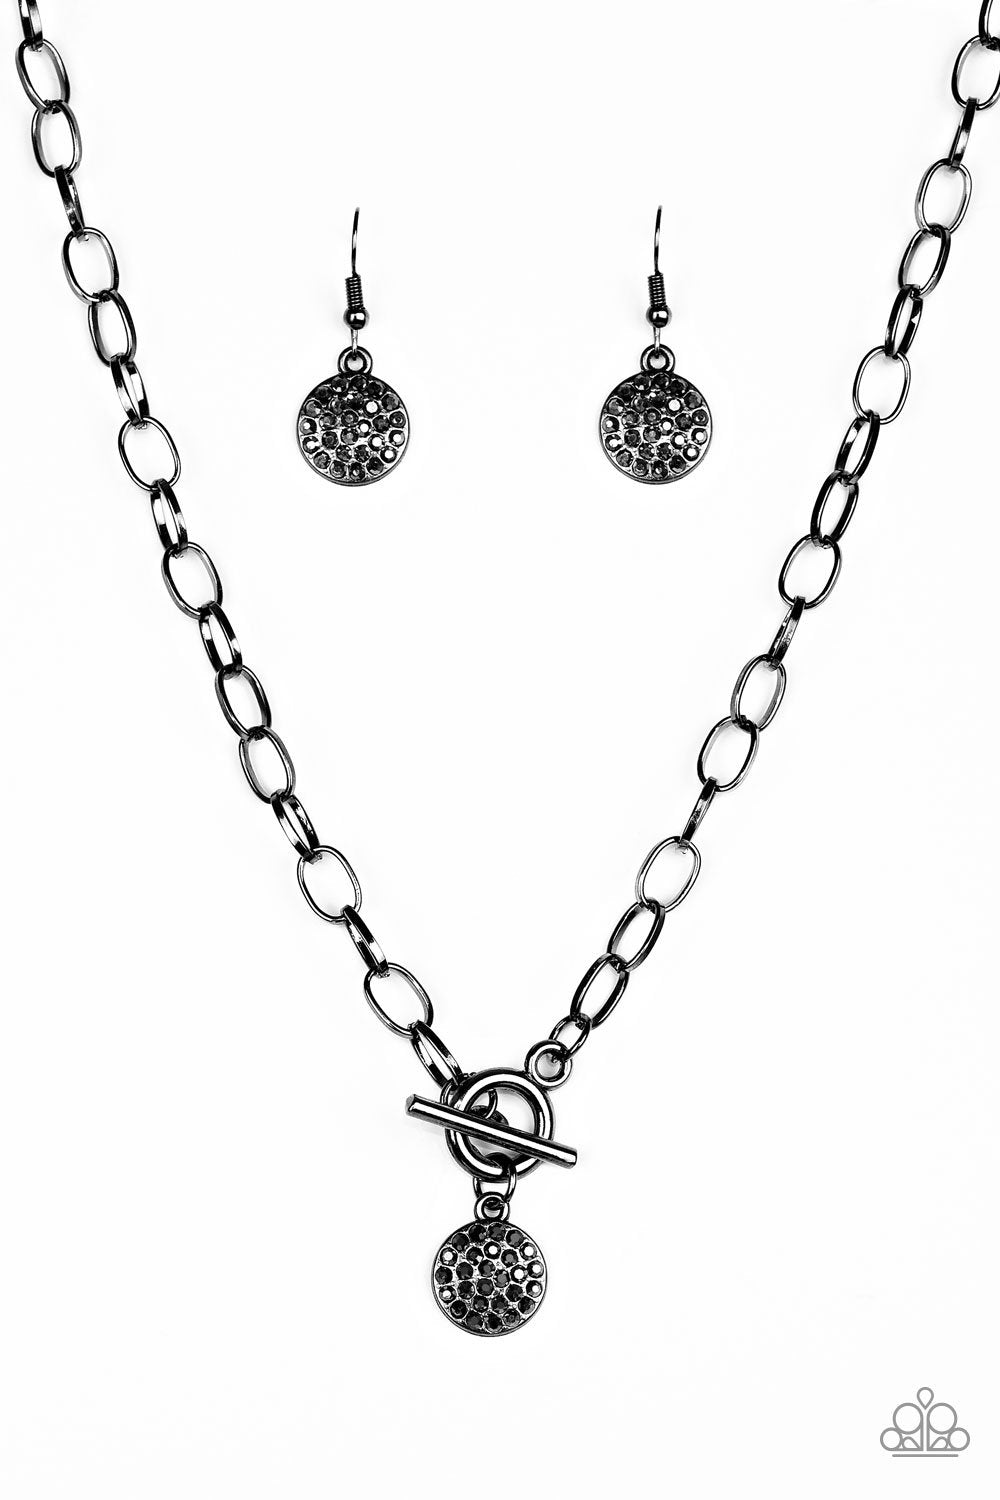 Sorority Sisters - Black (Gunmetal) Necklace freeshipping - JewLz4u Gemstone Gallery